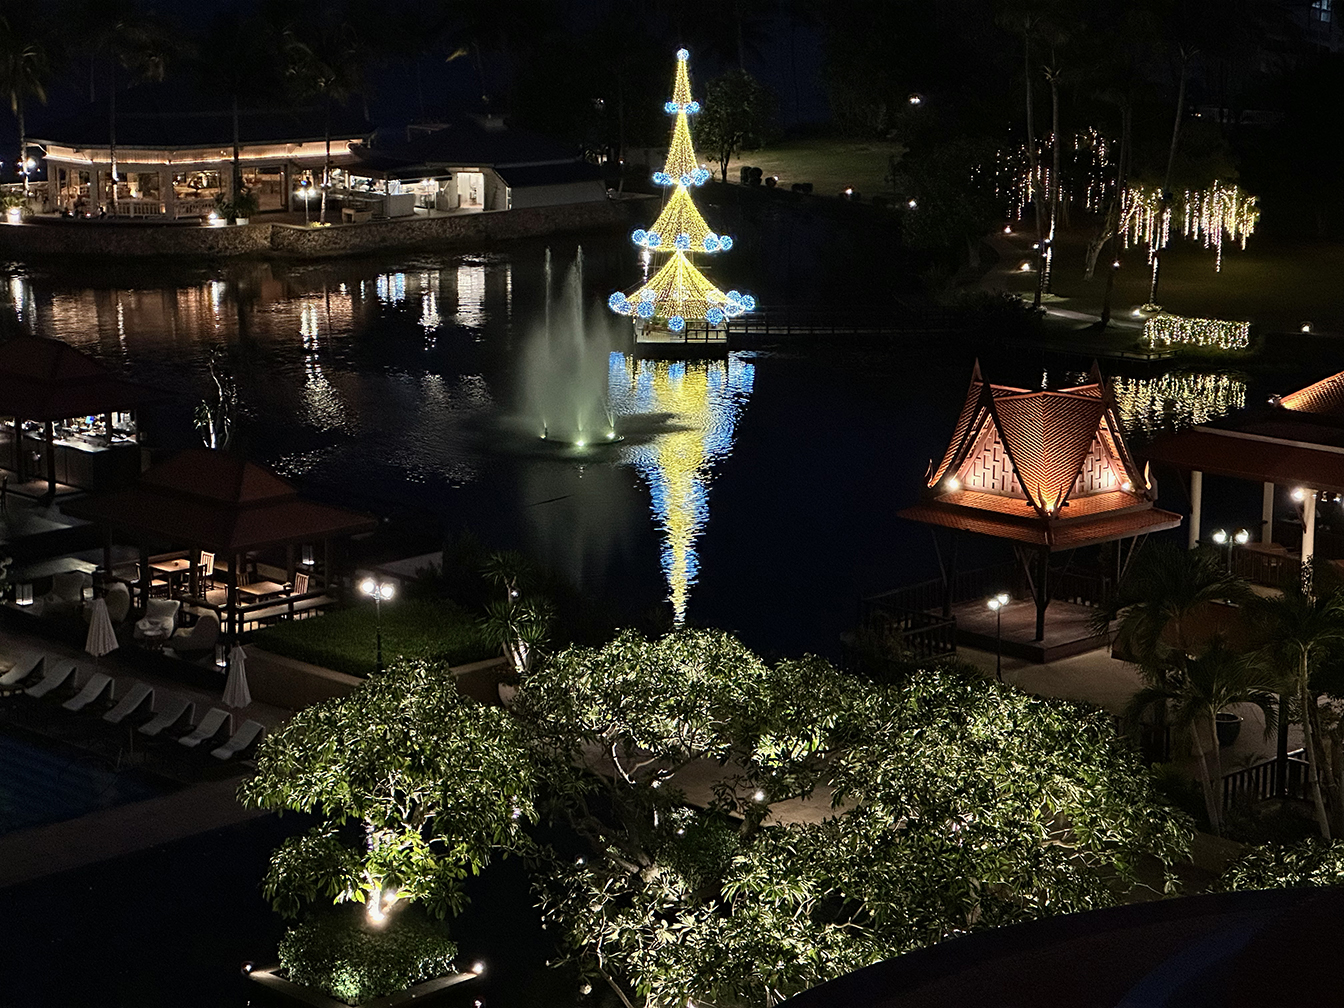 Dusit Thani Resort at Night